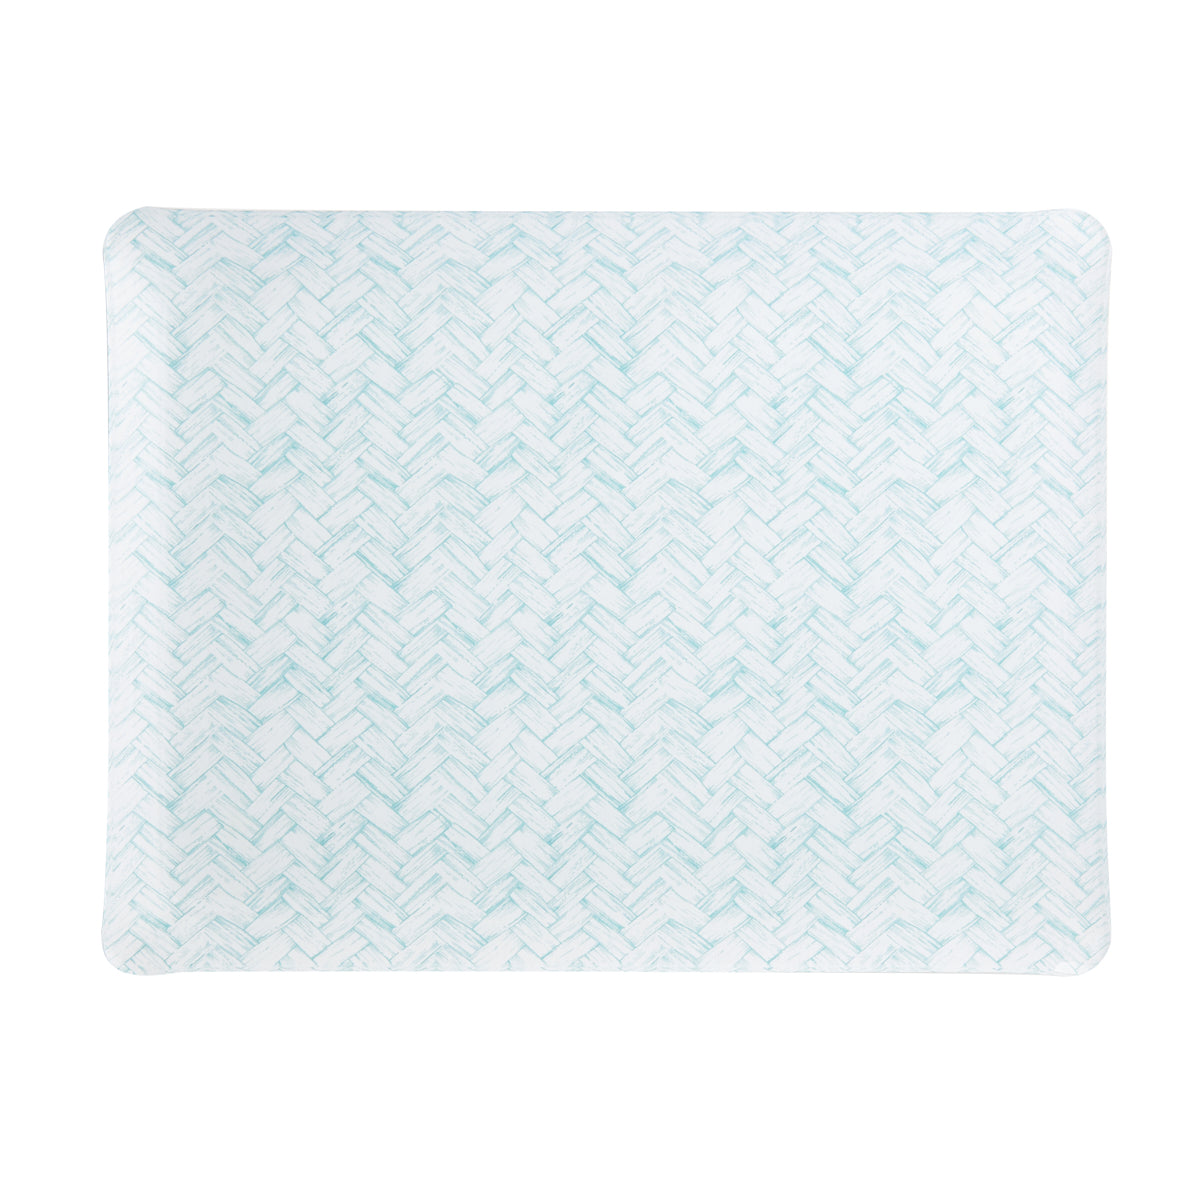 Nina Campbell Fabric Tray Medium - Basketweave Aqua